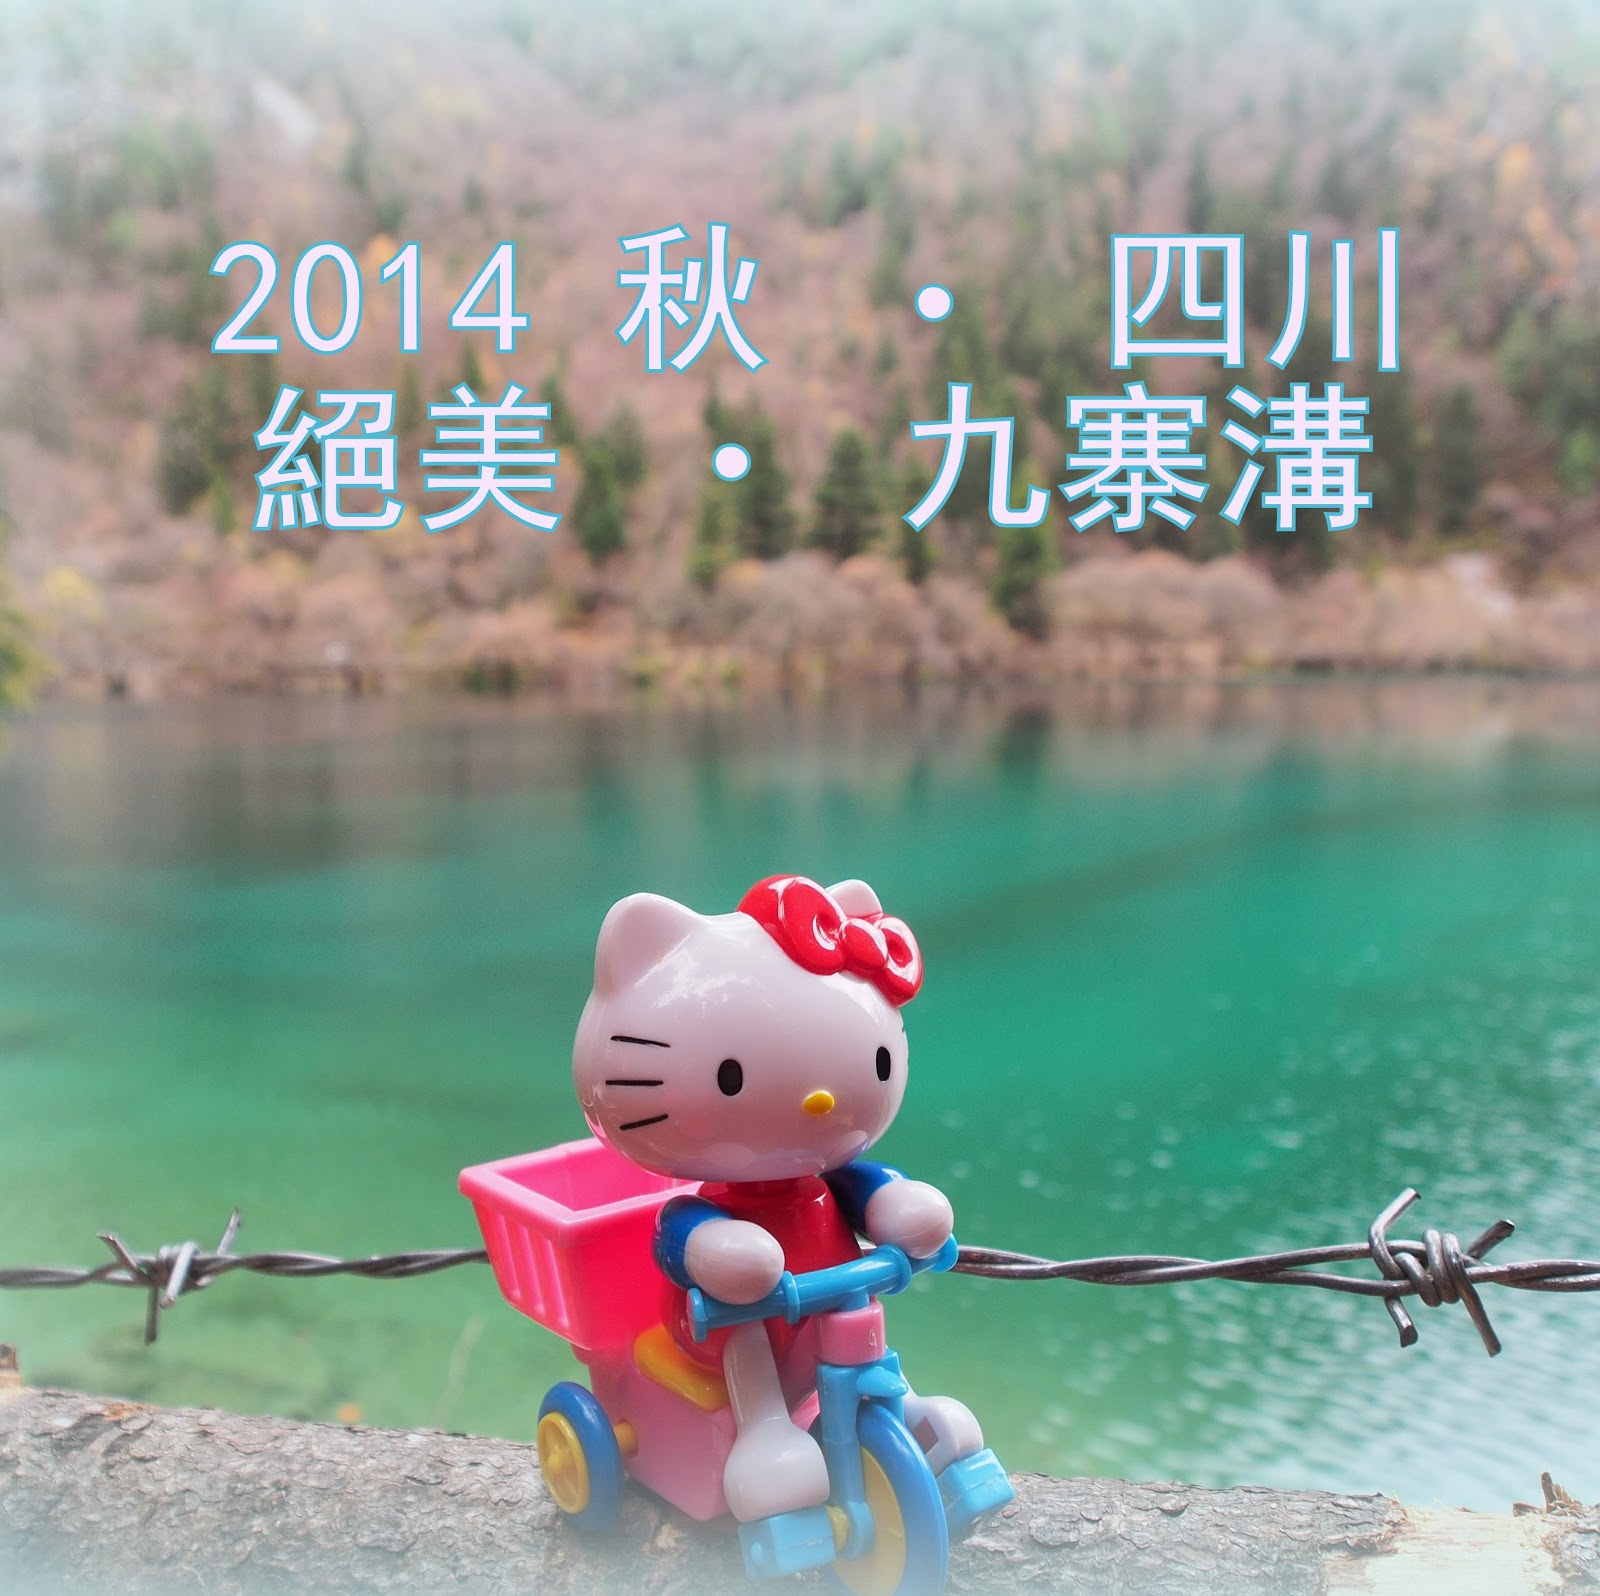 http://ivytao.blogspot.hk/2014/11/2014-day-1.html